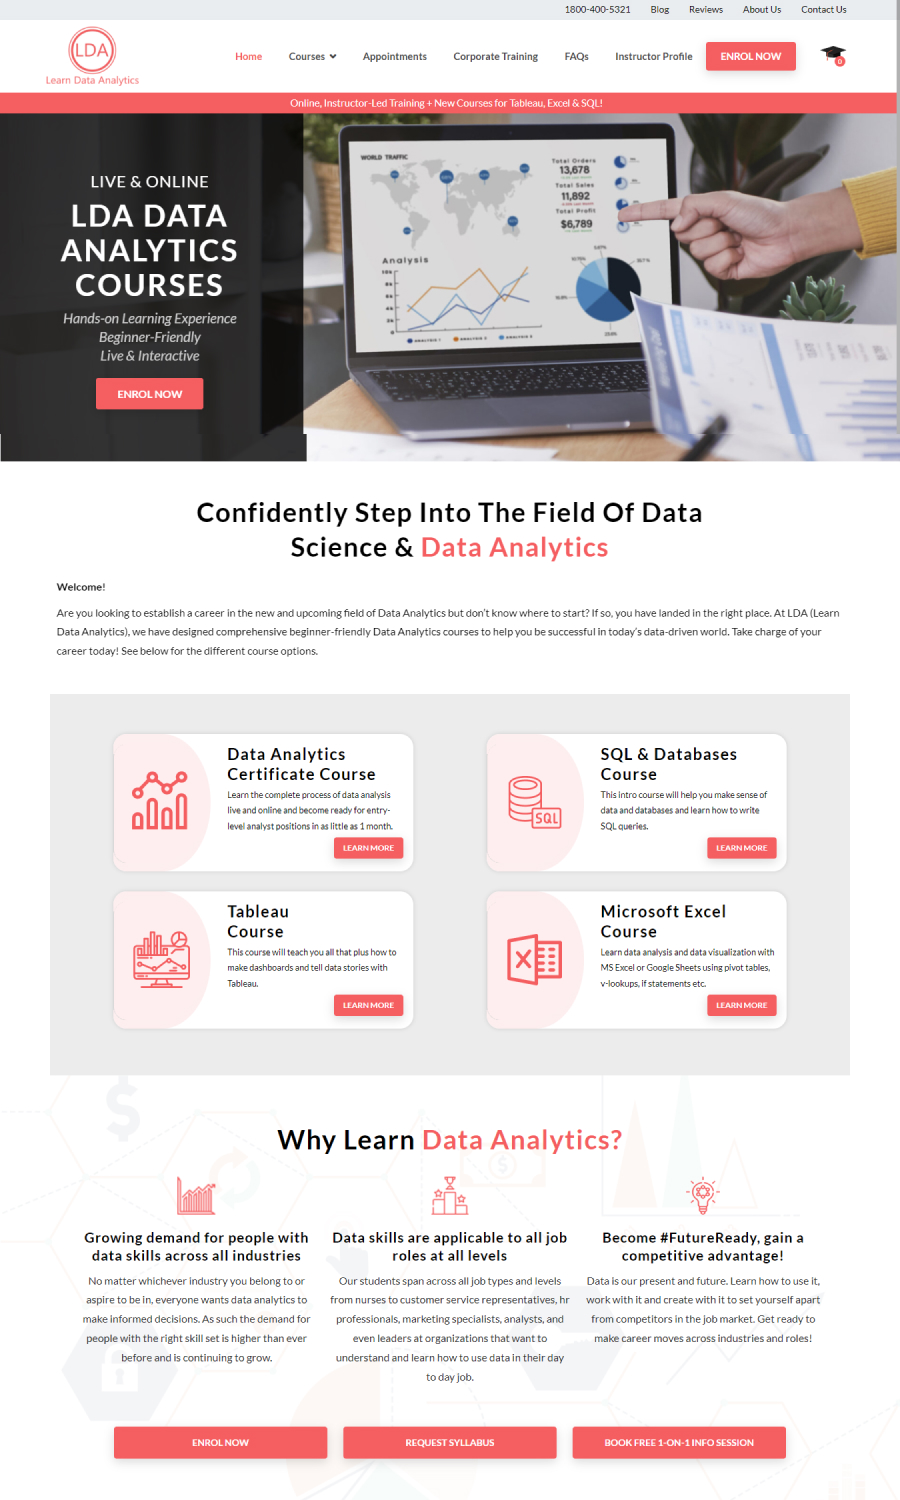 LDA - Learn Data Analytics